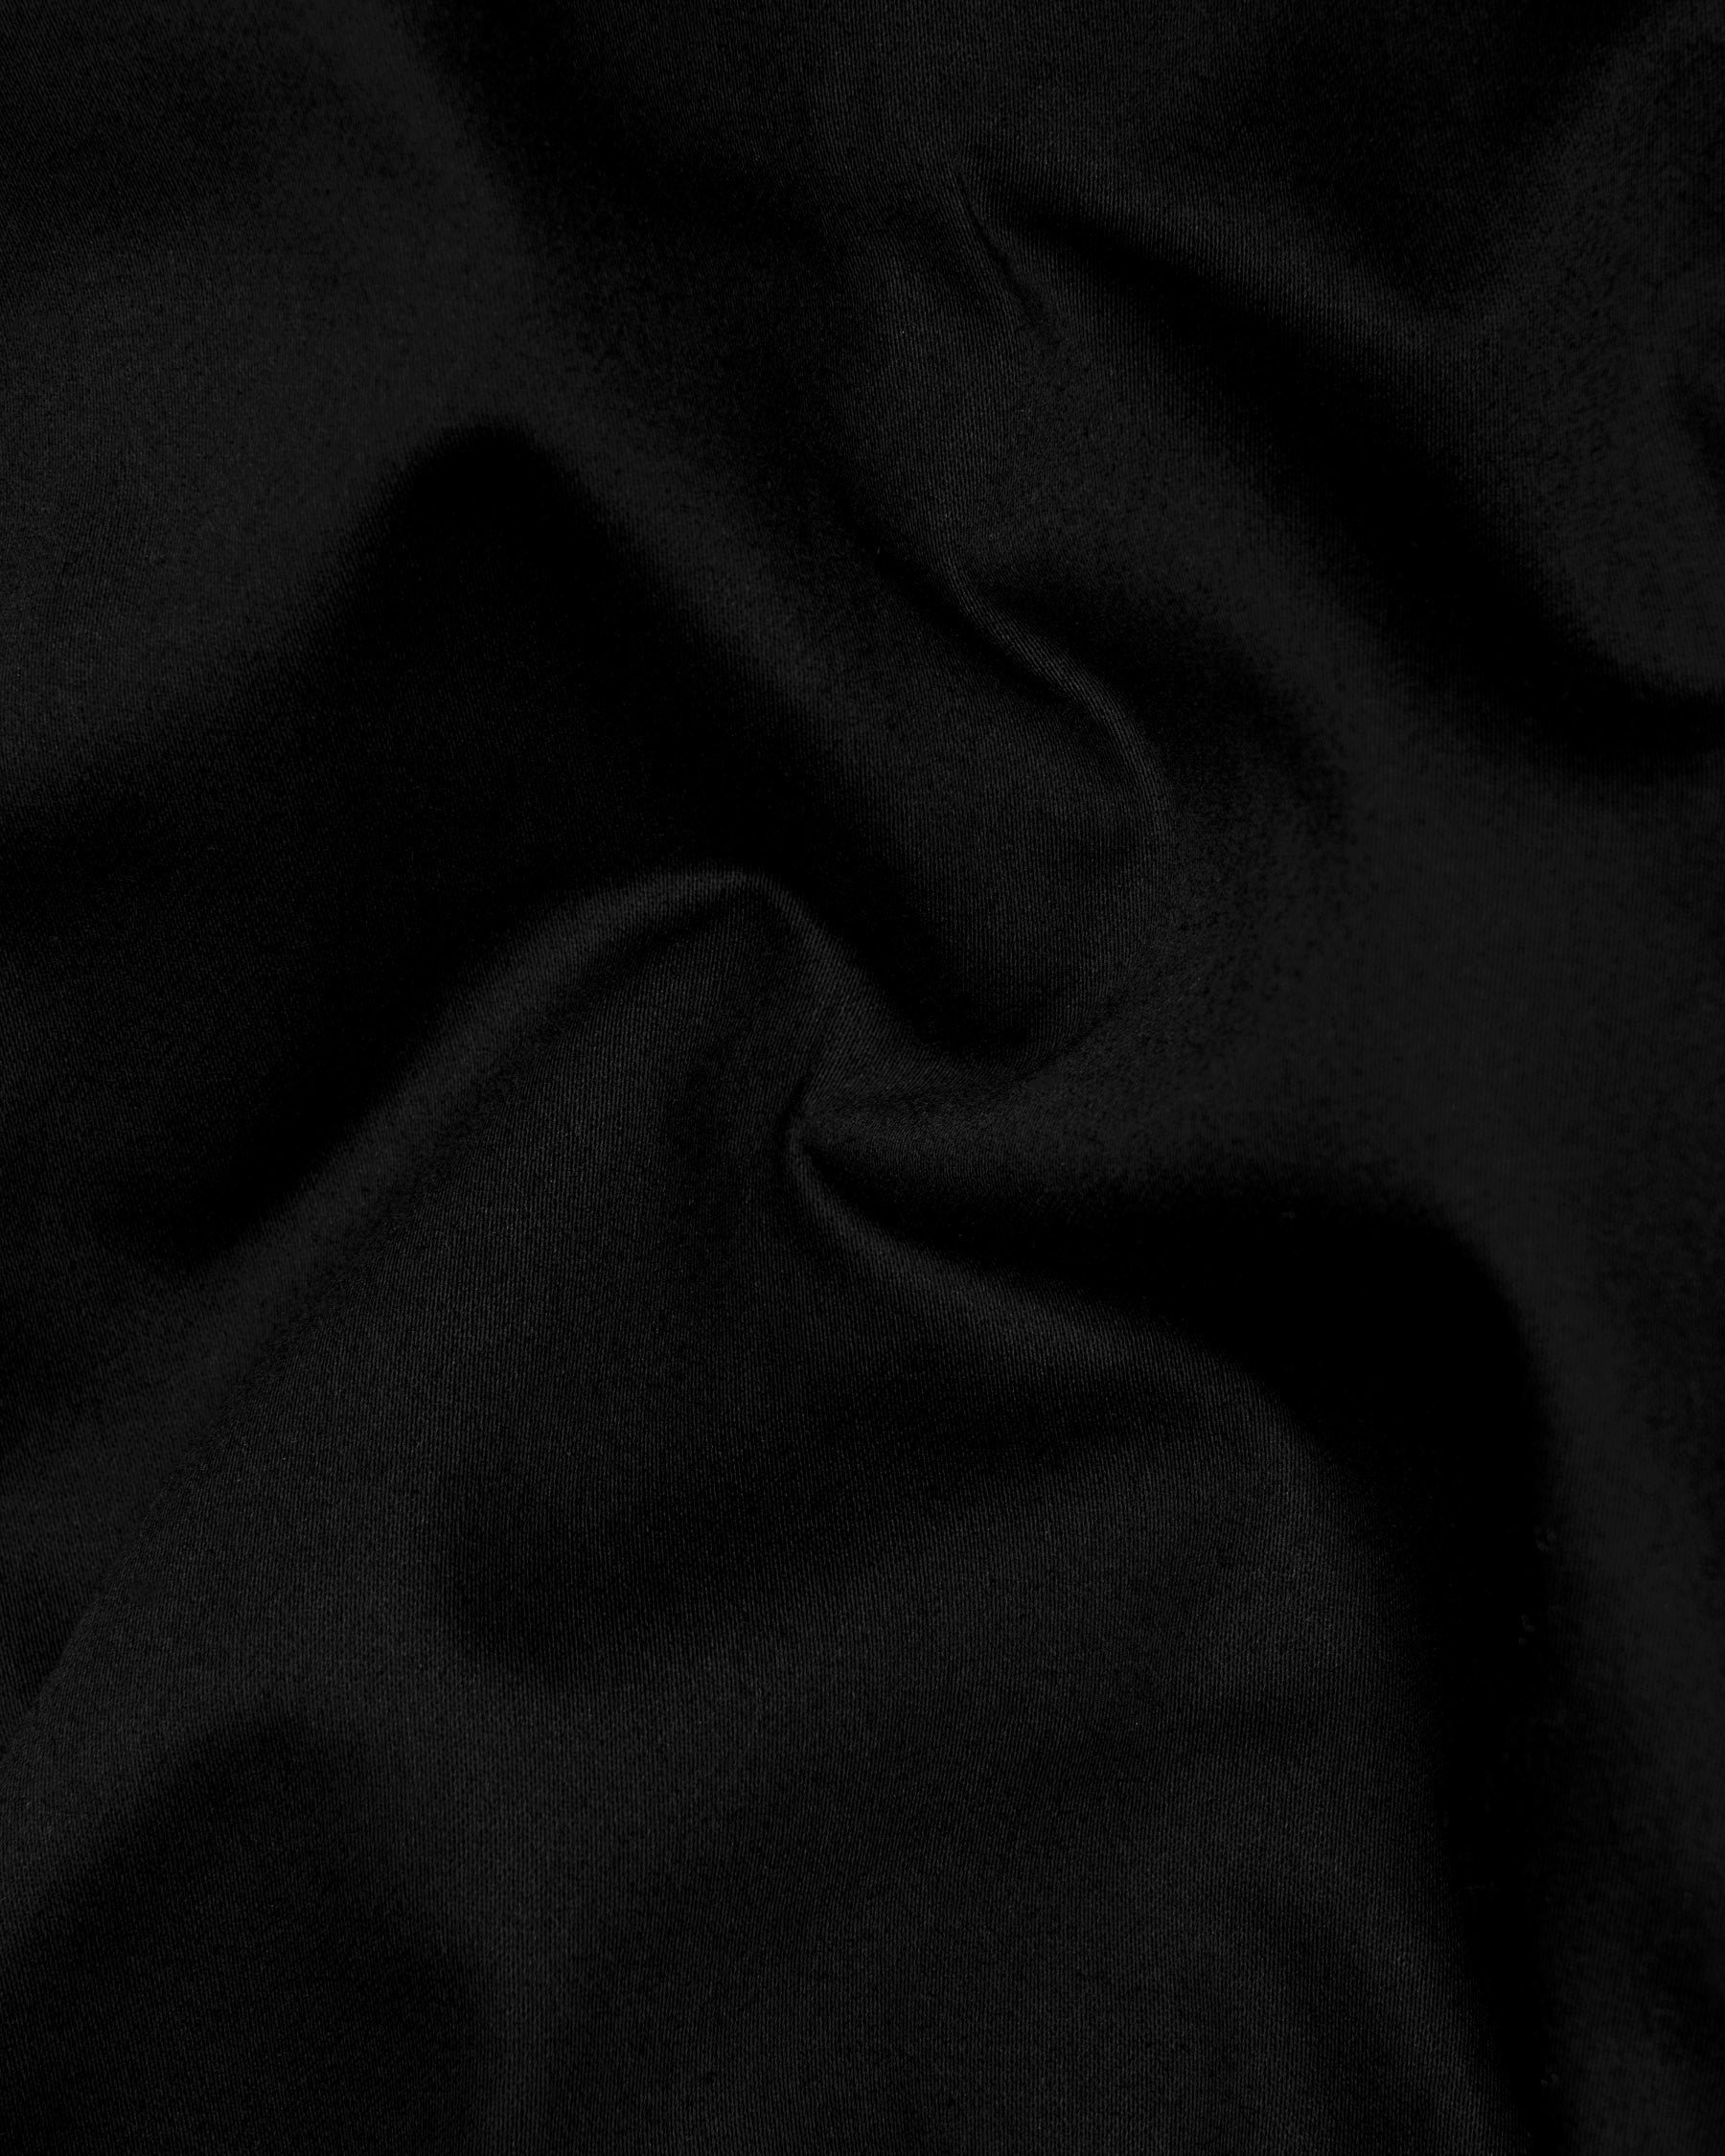 Jade Black Subtle Sheen with Dark Gray Stylish Lapel Designer Suit ST2099-DB2-D228-36, ST2099-DB2-D228-38, ST2099-DB2-D228-40, ST2099-DB2-D228-42, ST2099-DB2-D228-44, ST2099-DB2-D228-46, ST2099-DB2-D228-48, ST2099-DB2-D228-50, ST2099-DB2-D228-52, ST2099-DB2-D228-54, ST2099-DB2-D228-56, ST2099-DB2-D228-58, ST2099-DB2-D228-60